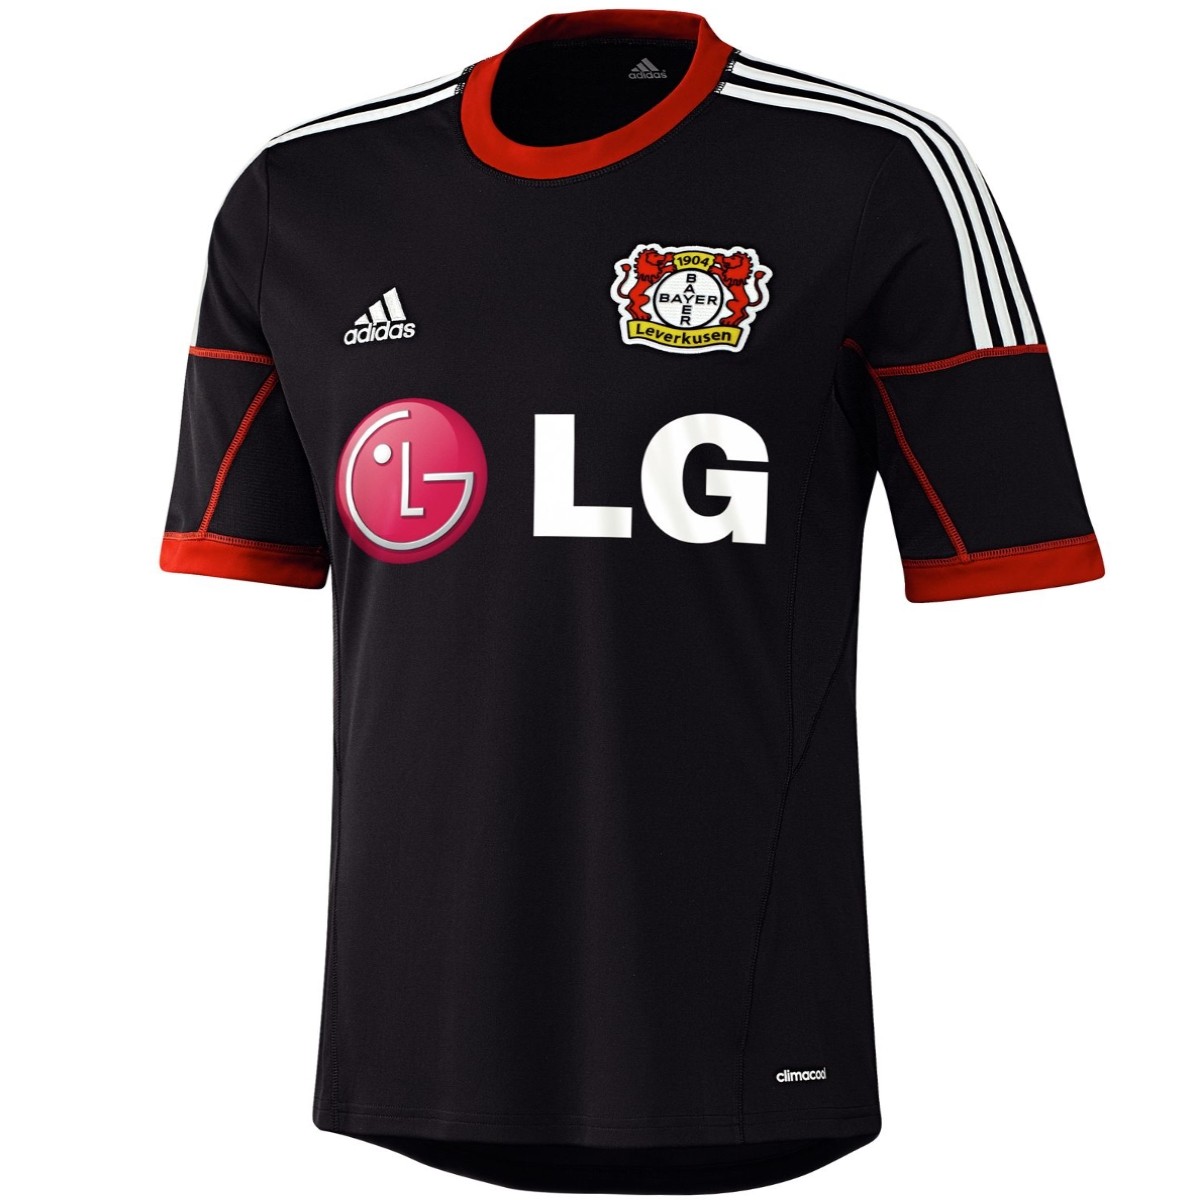 Leverkusen Away Football shirt Adidas - SportingPlus Passion for Sport